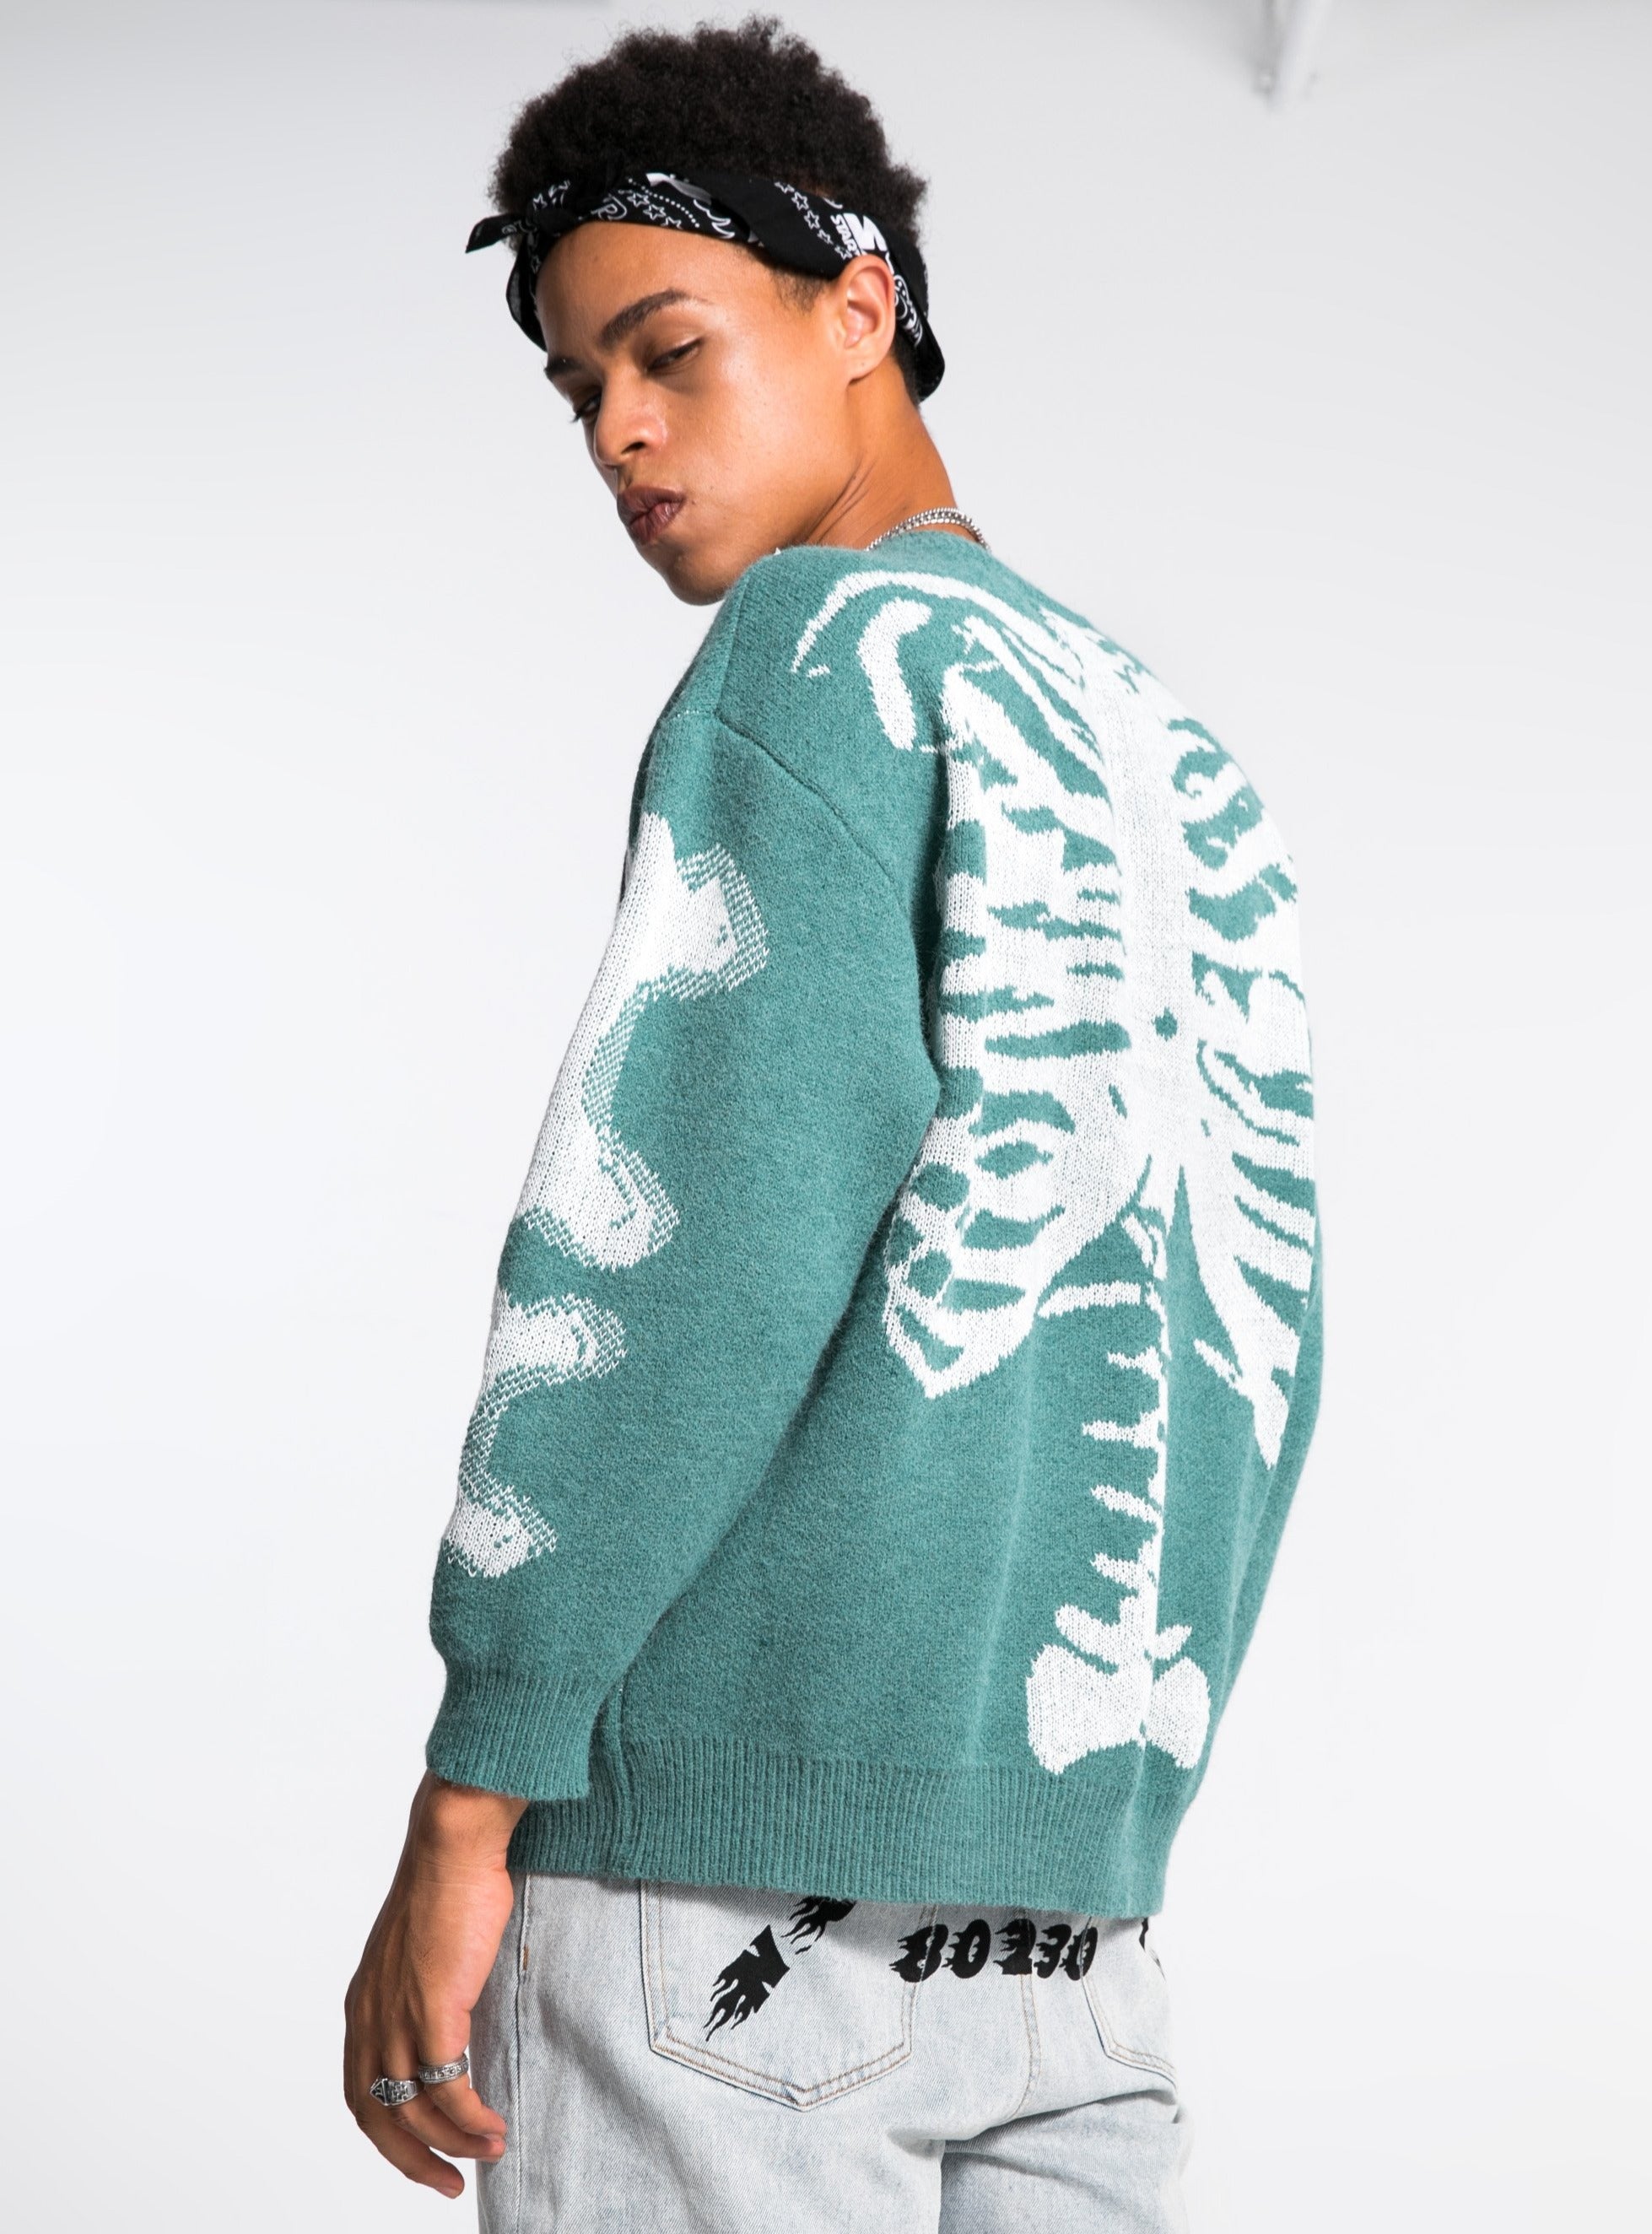 JUSTNOTAG Vintage Skeleton Print Knitted Sweater